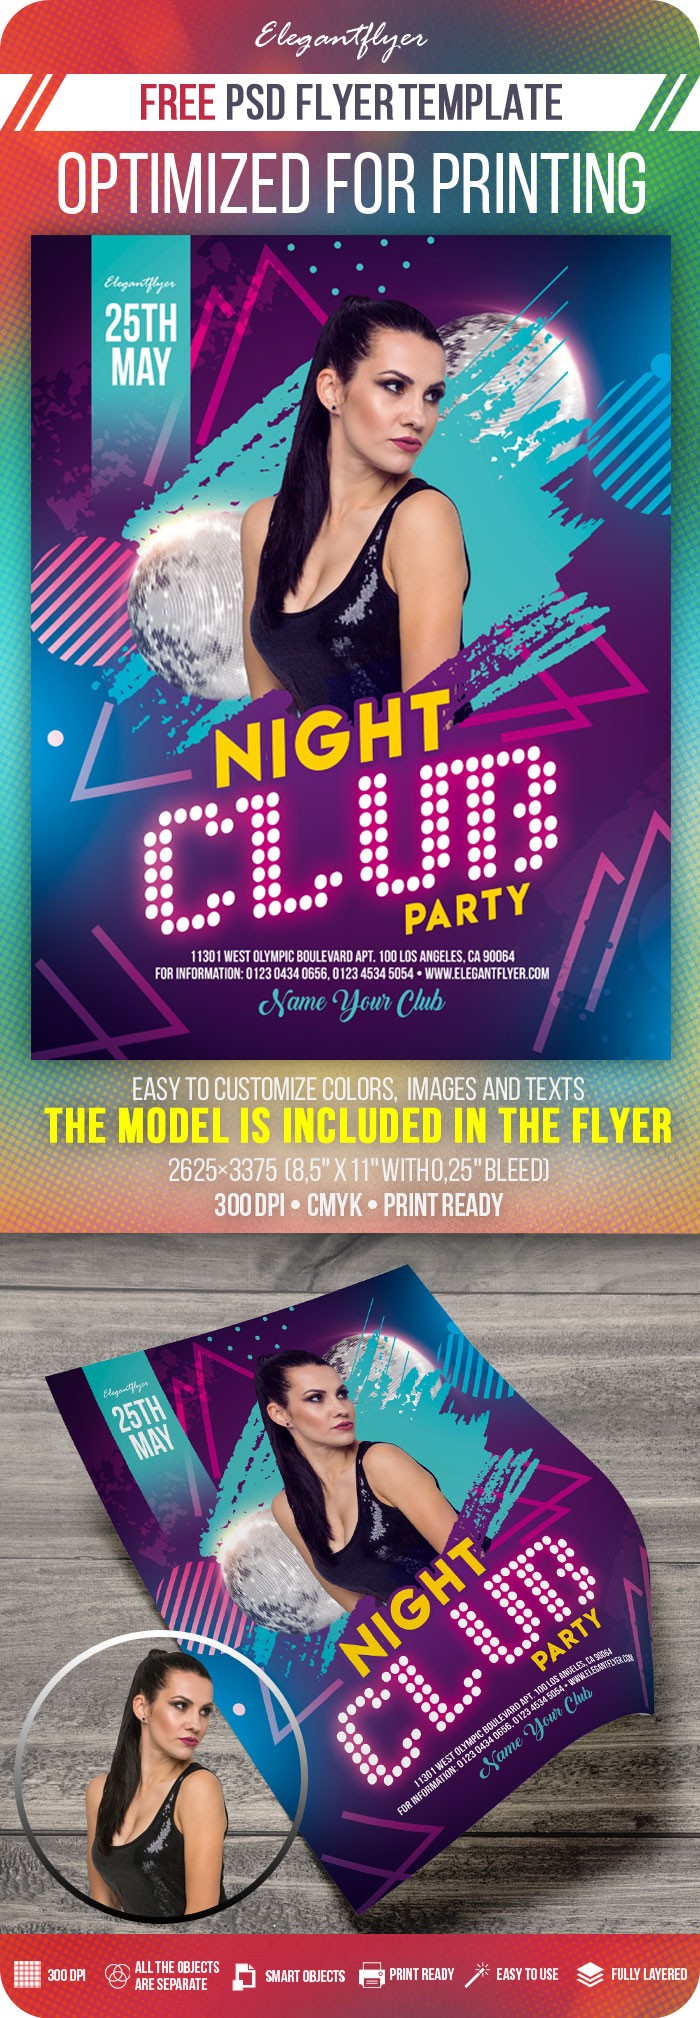 Night Club Party by ElegantFlyer